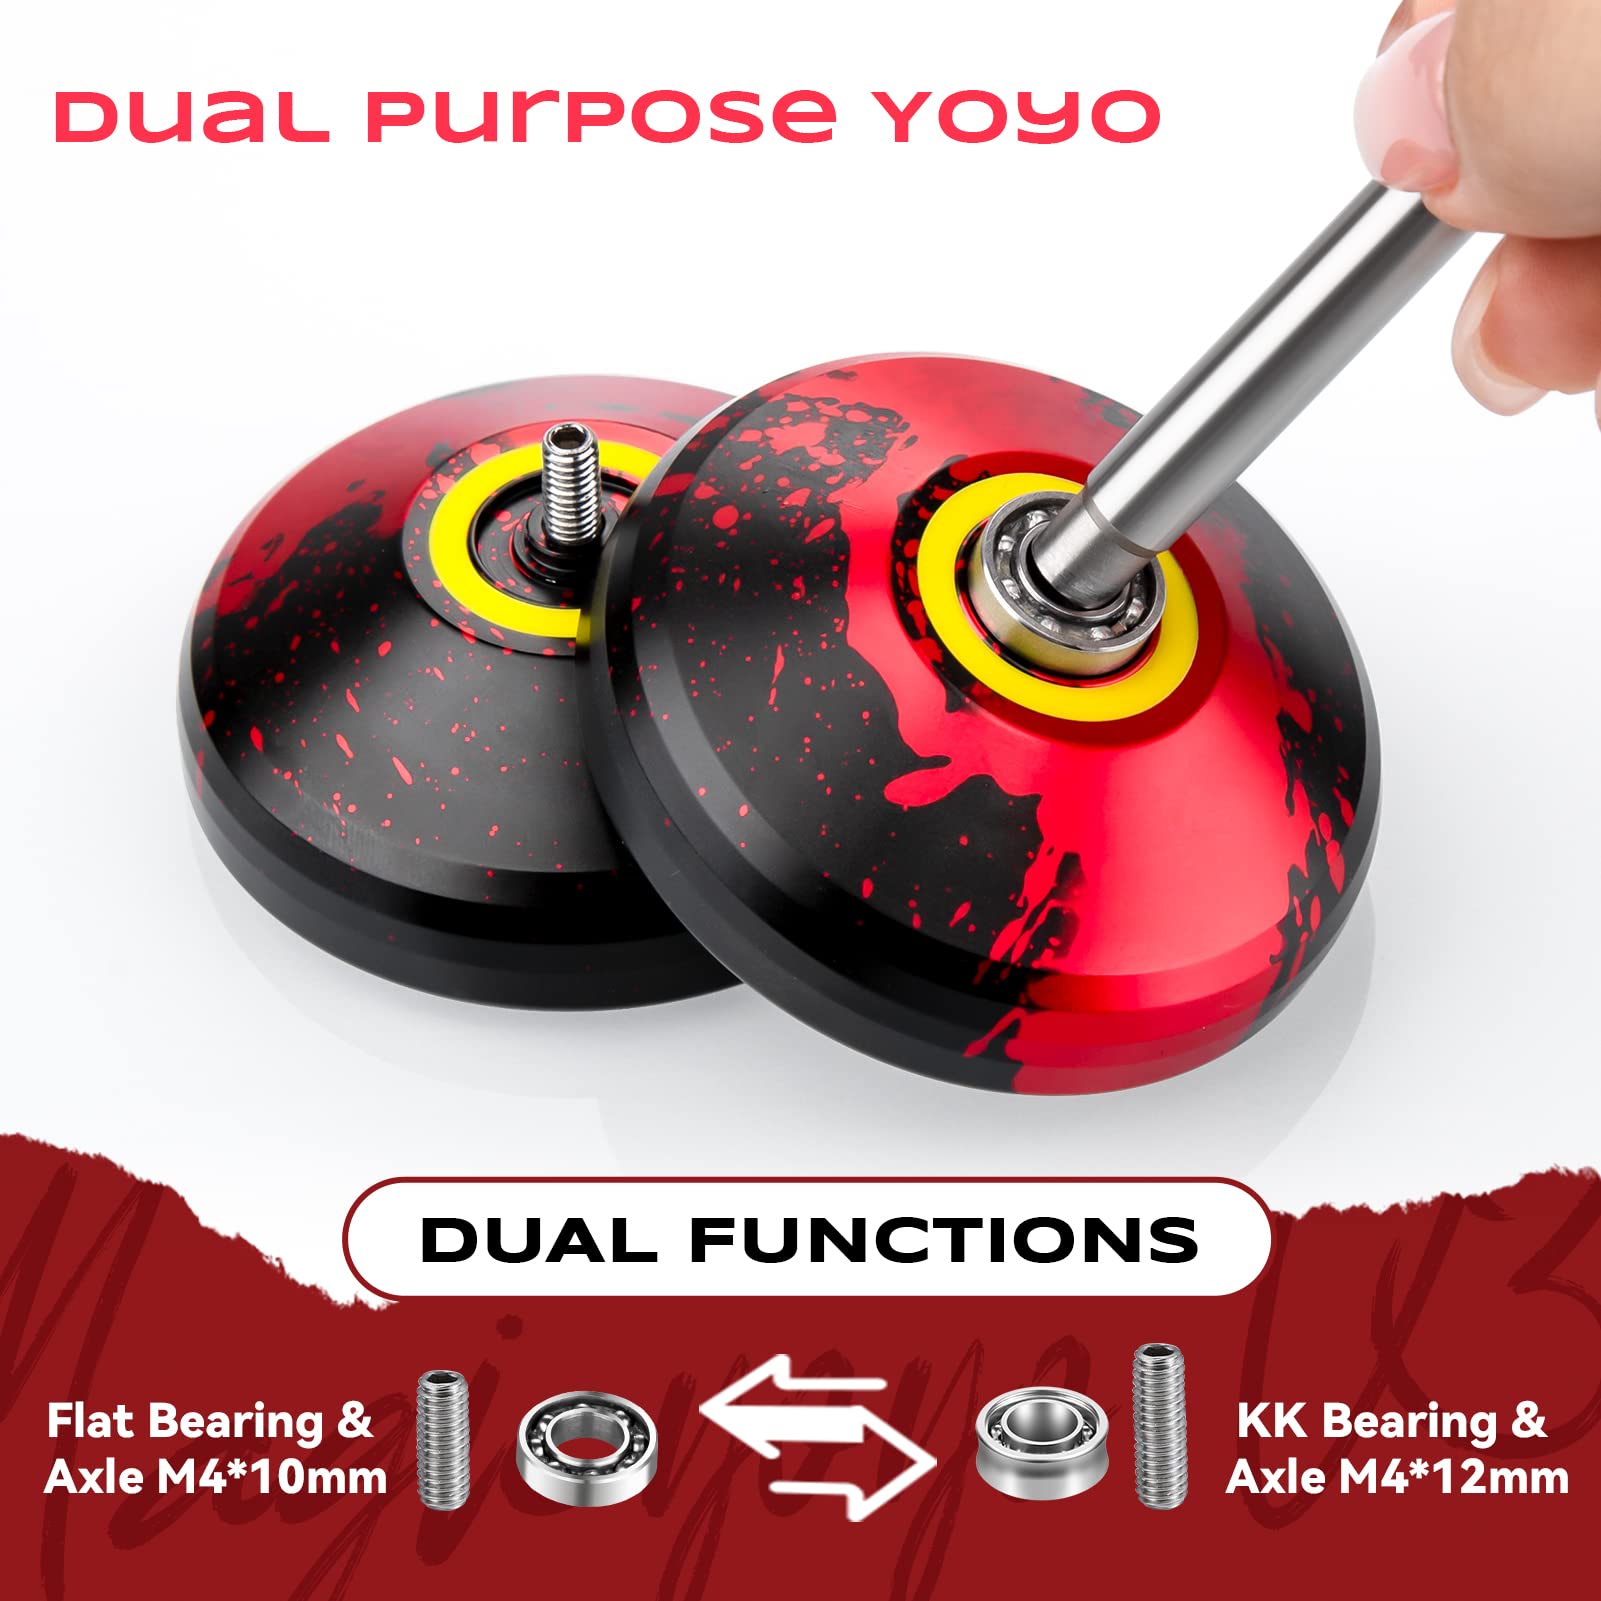 YOYO Replacement - 2 PCS Unresponsive Yoyo Bearing + 2 PCS Long Axle (12mm) + Yoyo Bearing Remover Tool